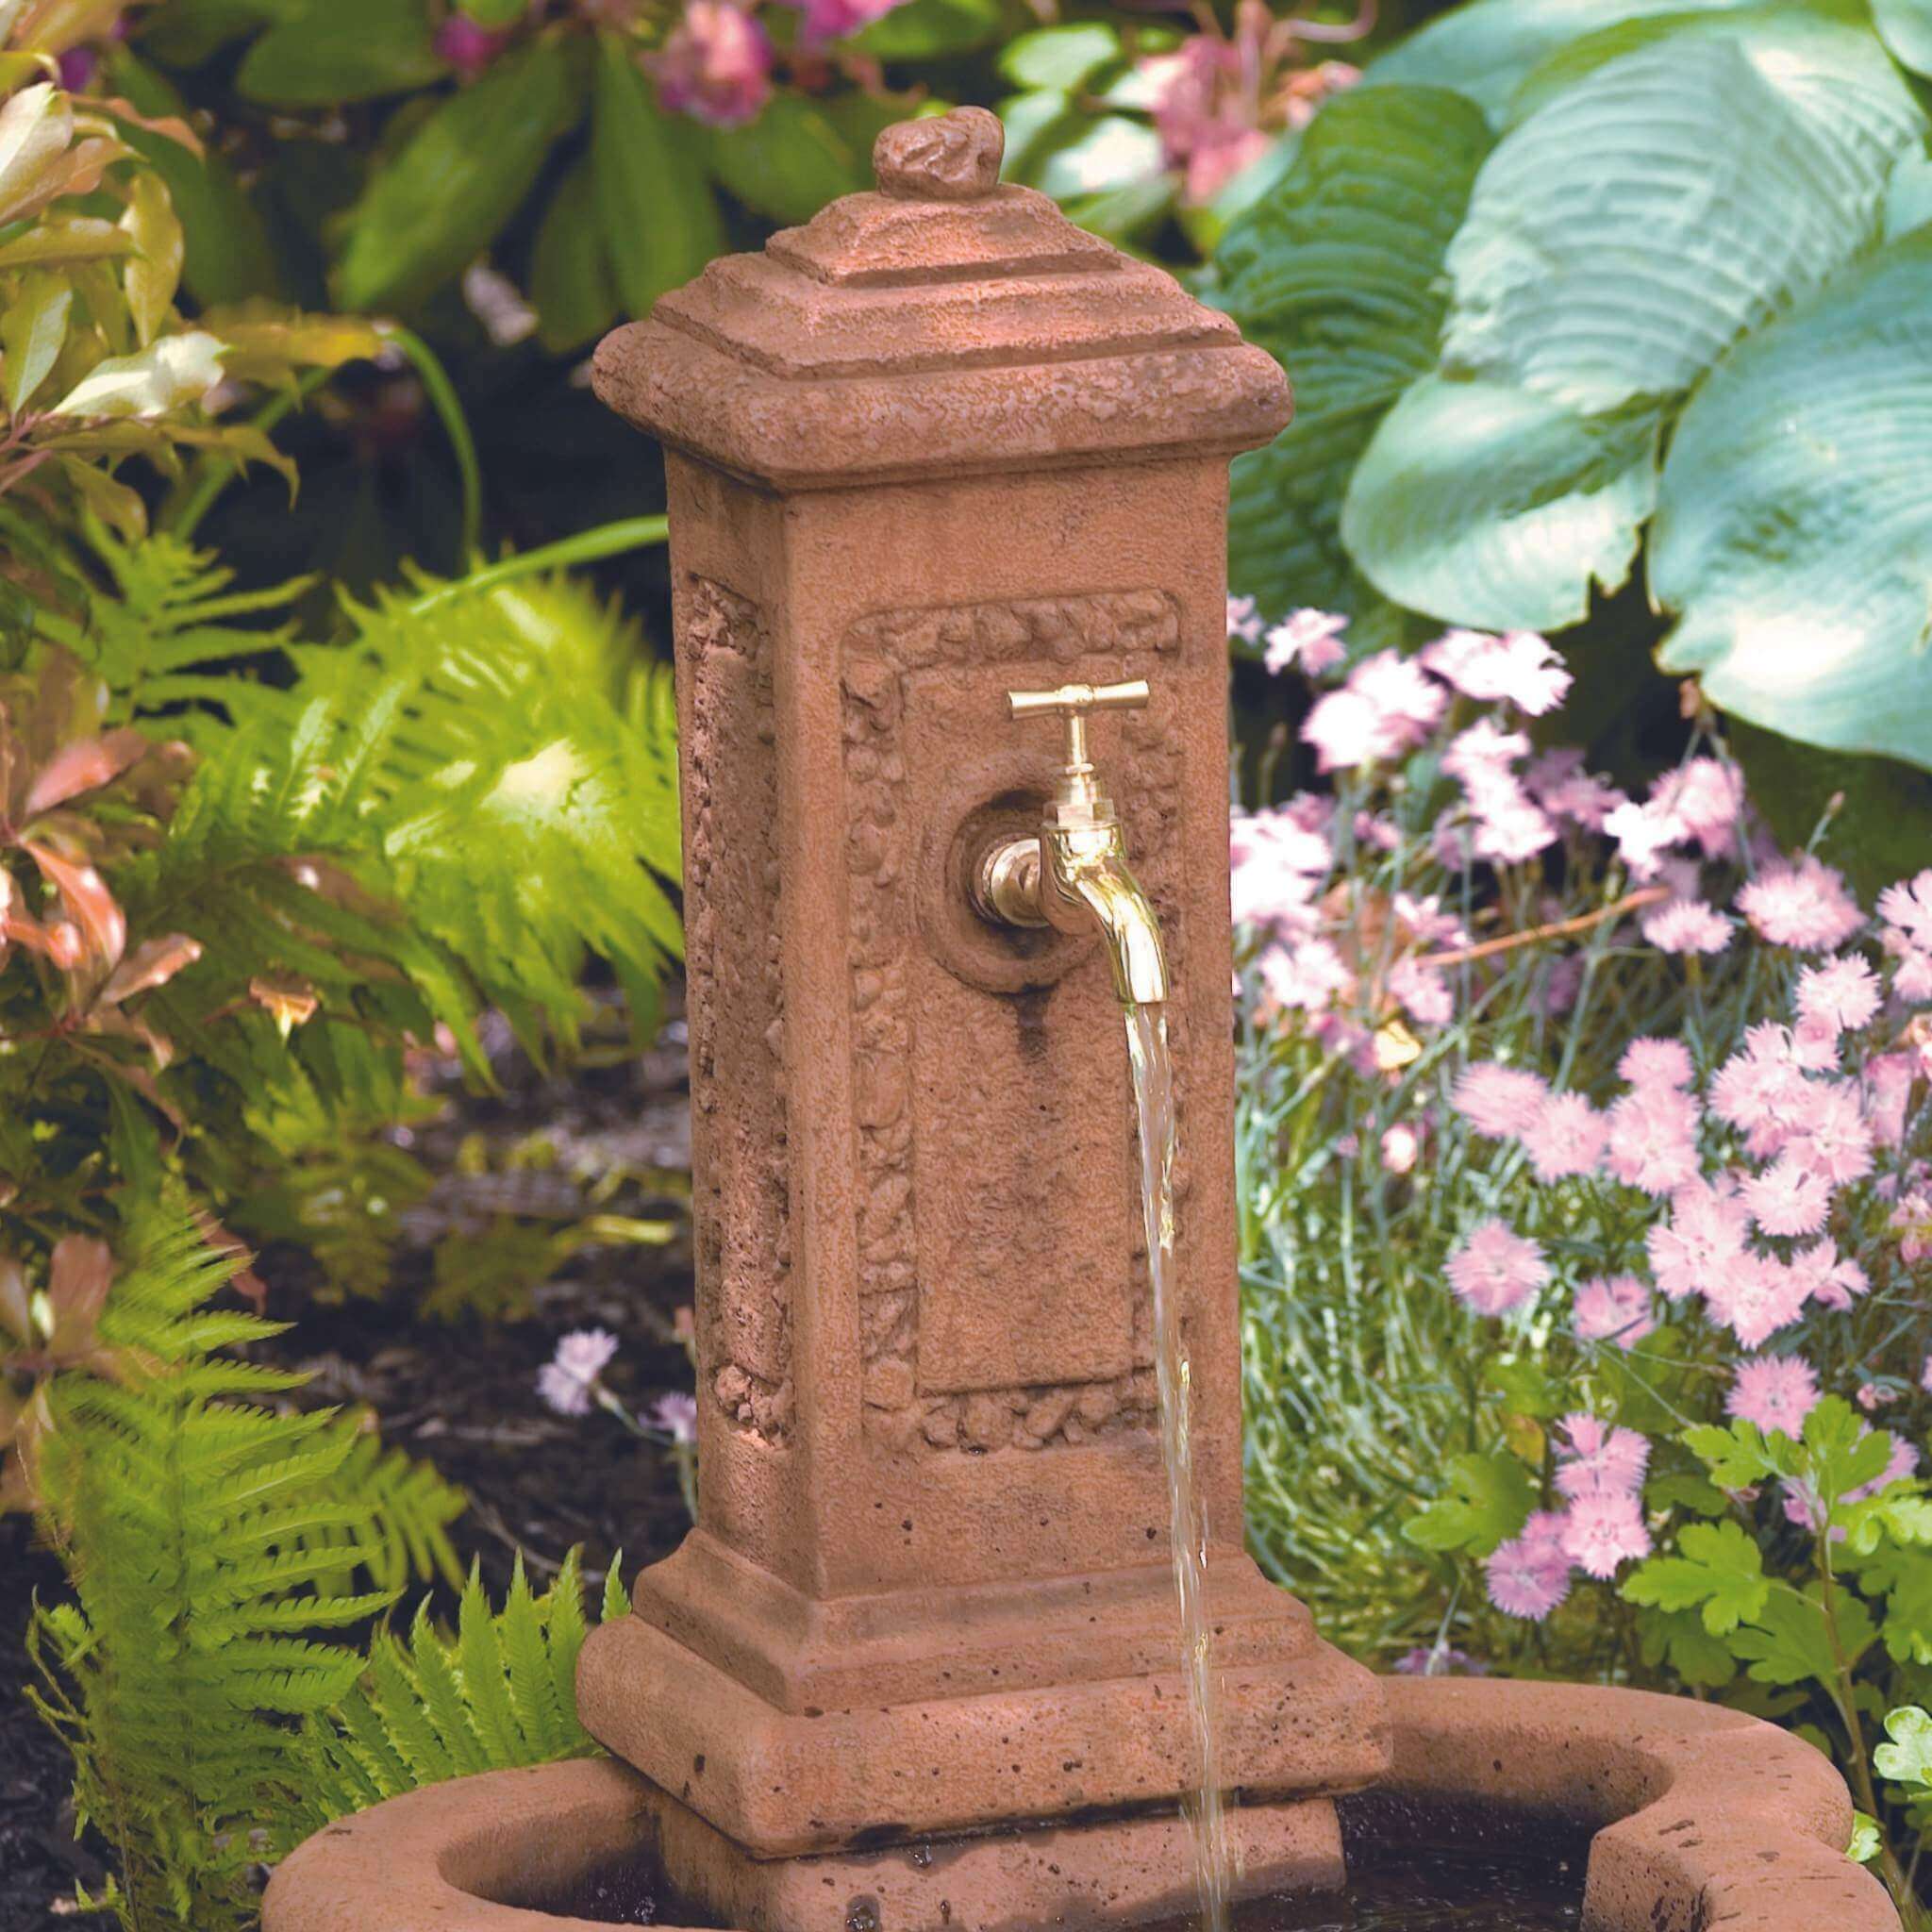 Petite Garden Concrete Fountain - Massarellis #3556